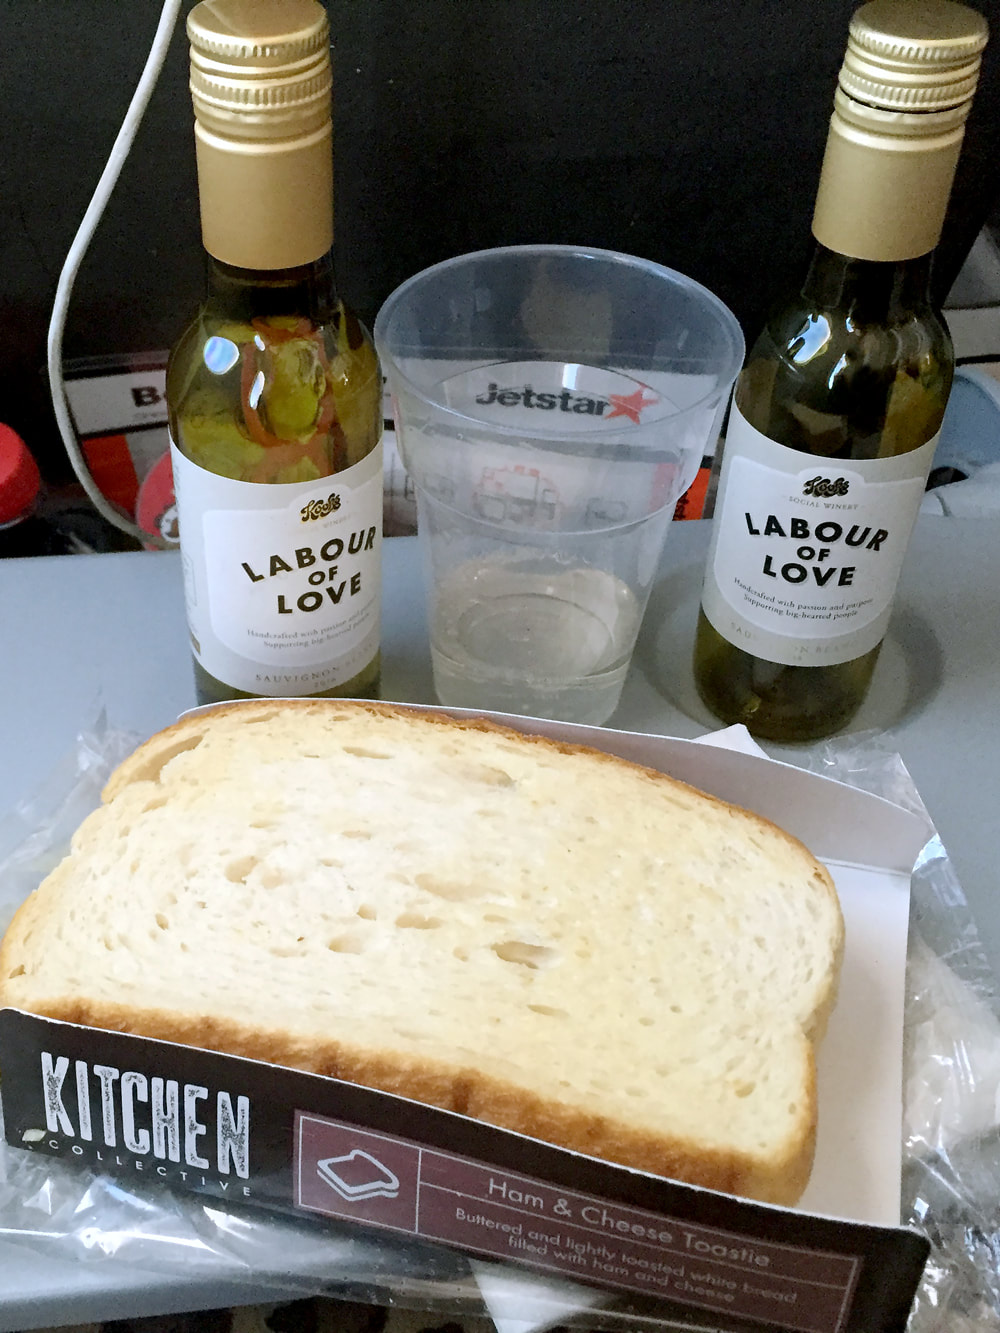 Onboard flight snacks - Jetstar Melbourne to Singapore Flight JQ 007.